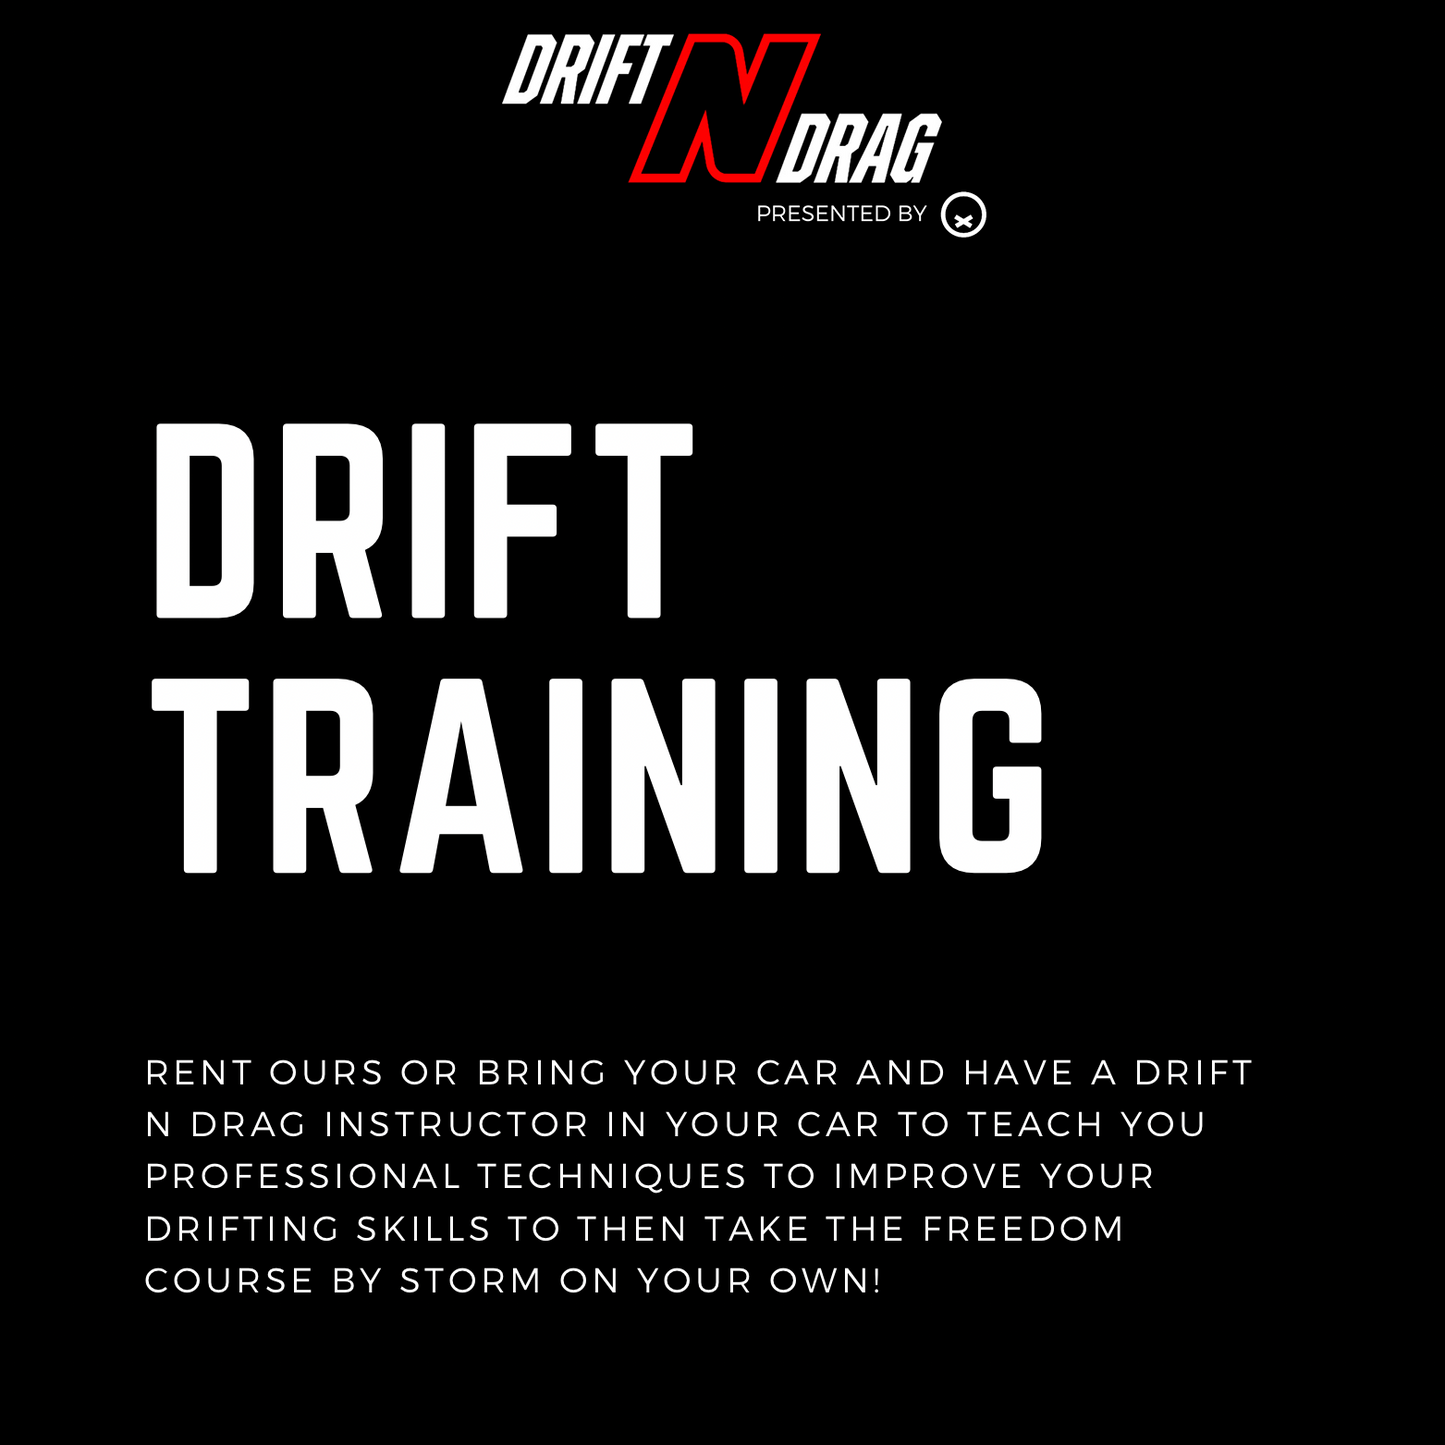 Drift N Drag - May 4th